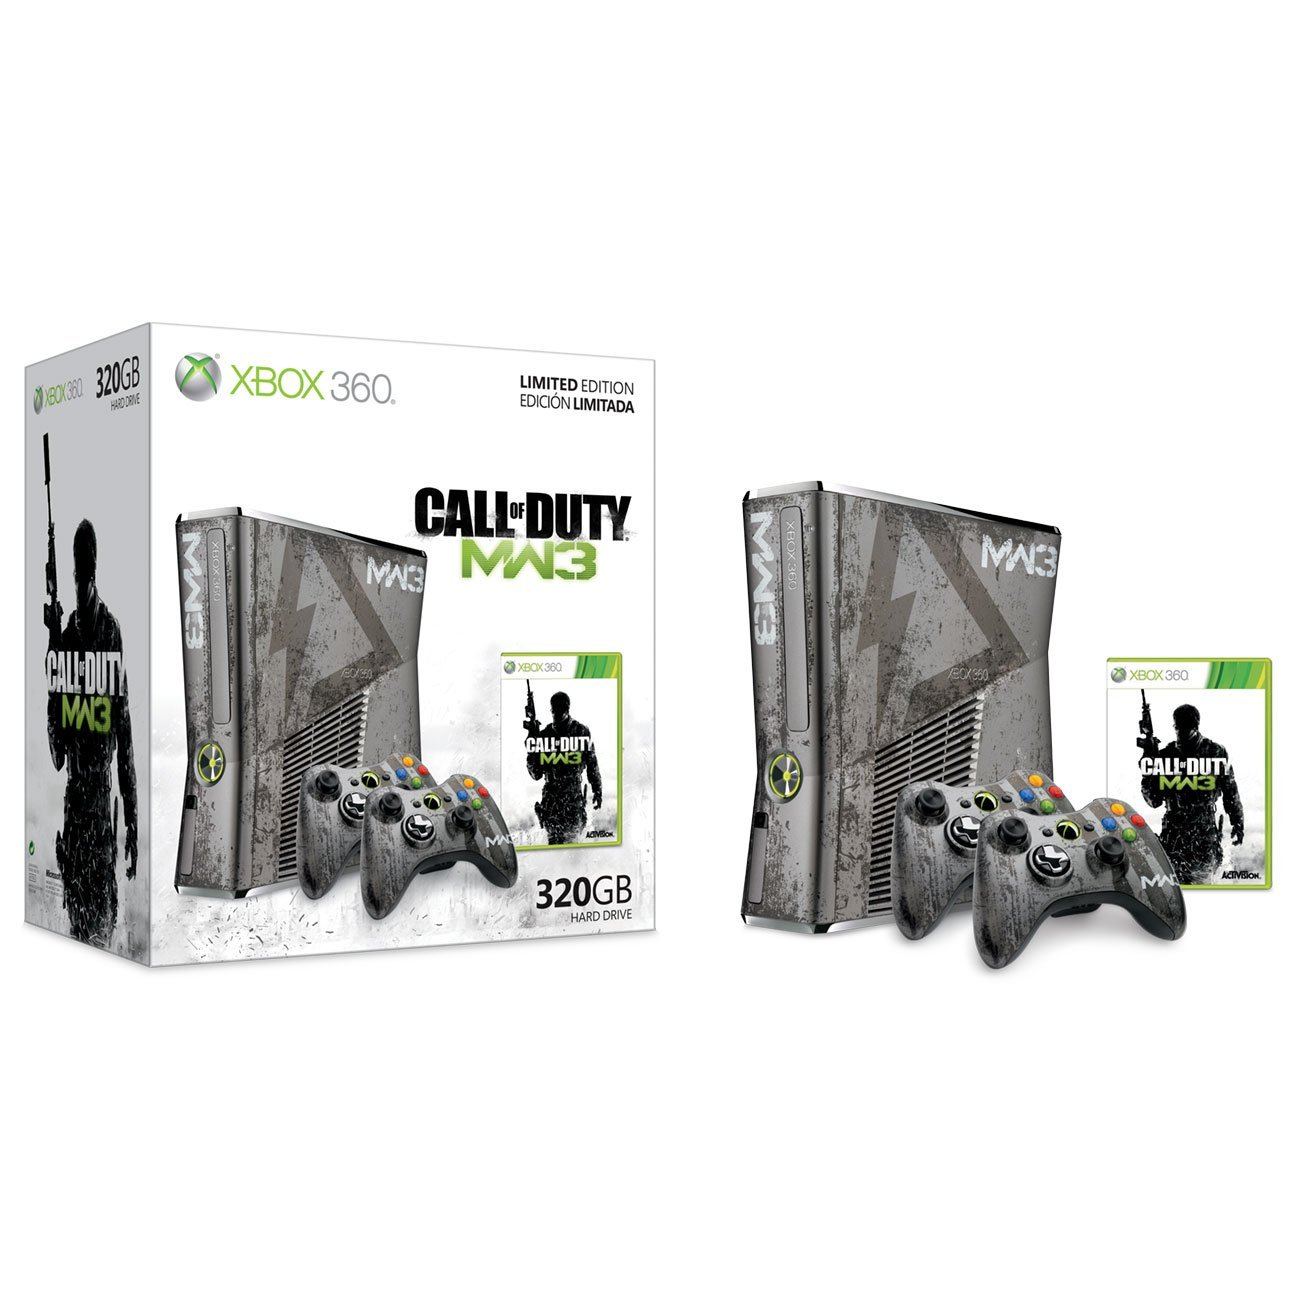 Xbox 360 Limited Edition Call of Duty: Modern Warfare 3 Console (320GB) (US)